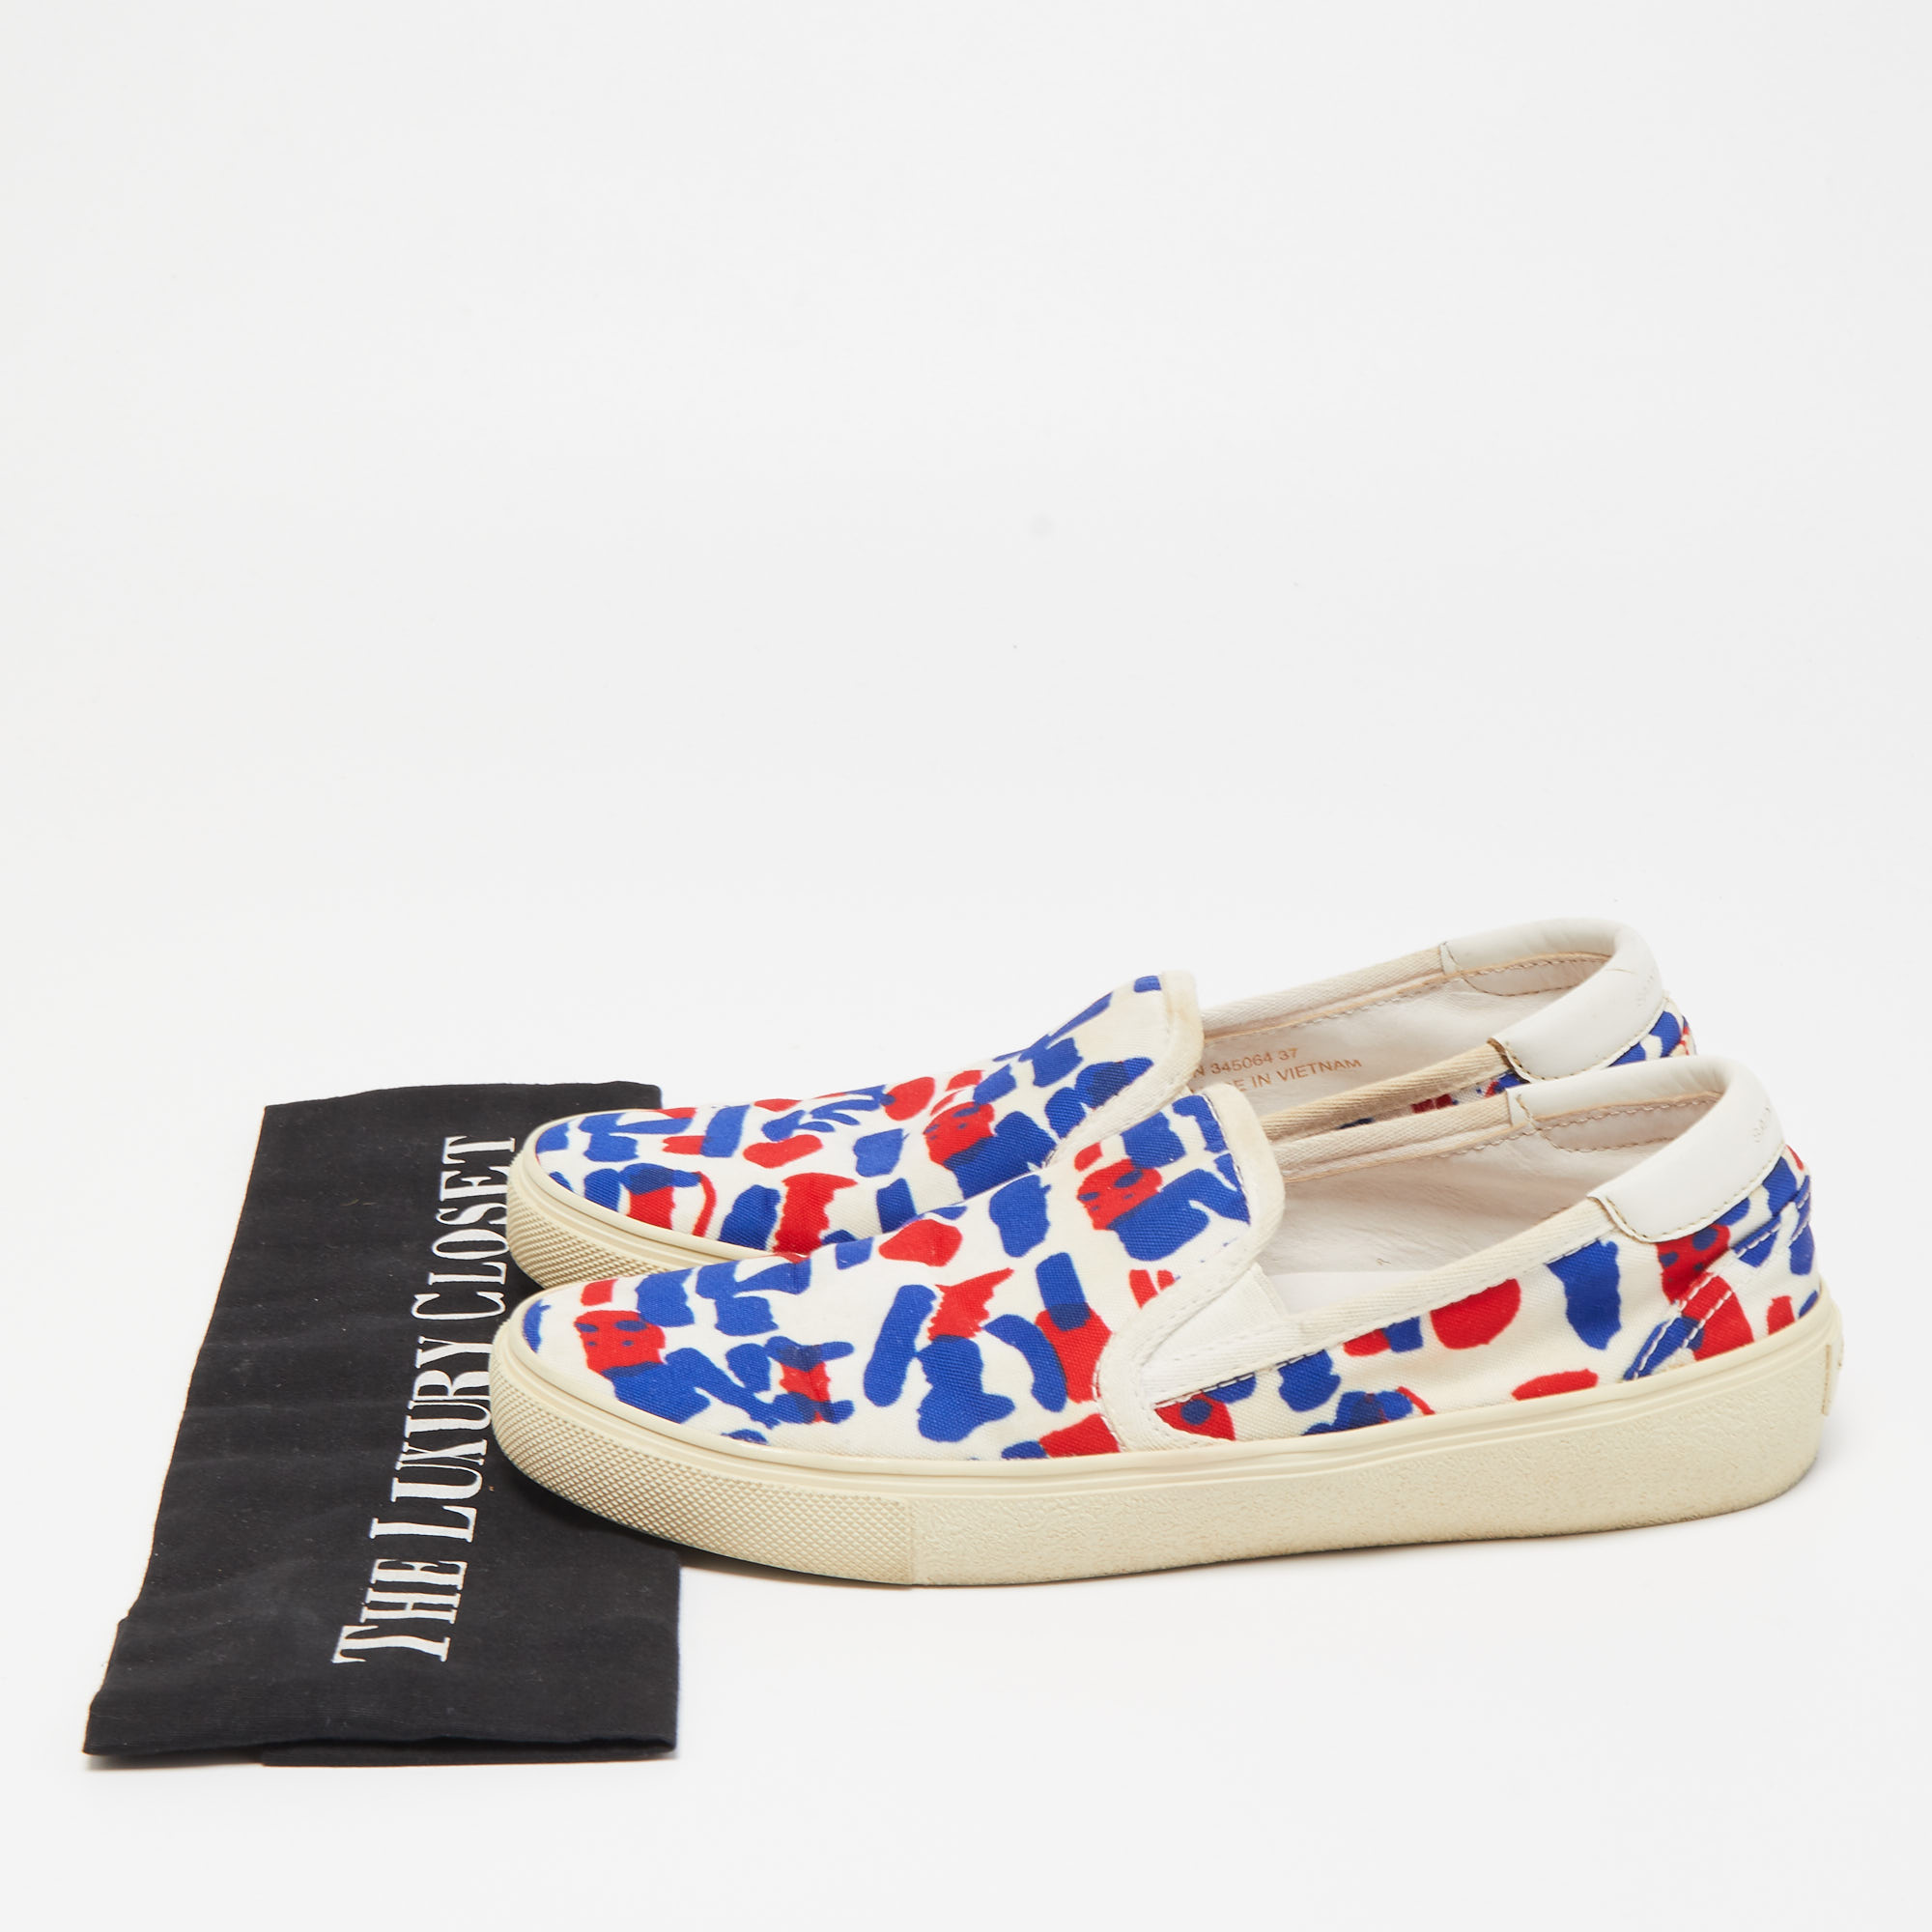 Saint Laurent Tricolor Printed Canvas Slip On Sneakers Size 37